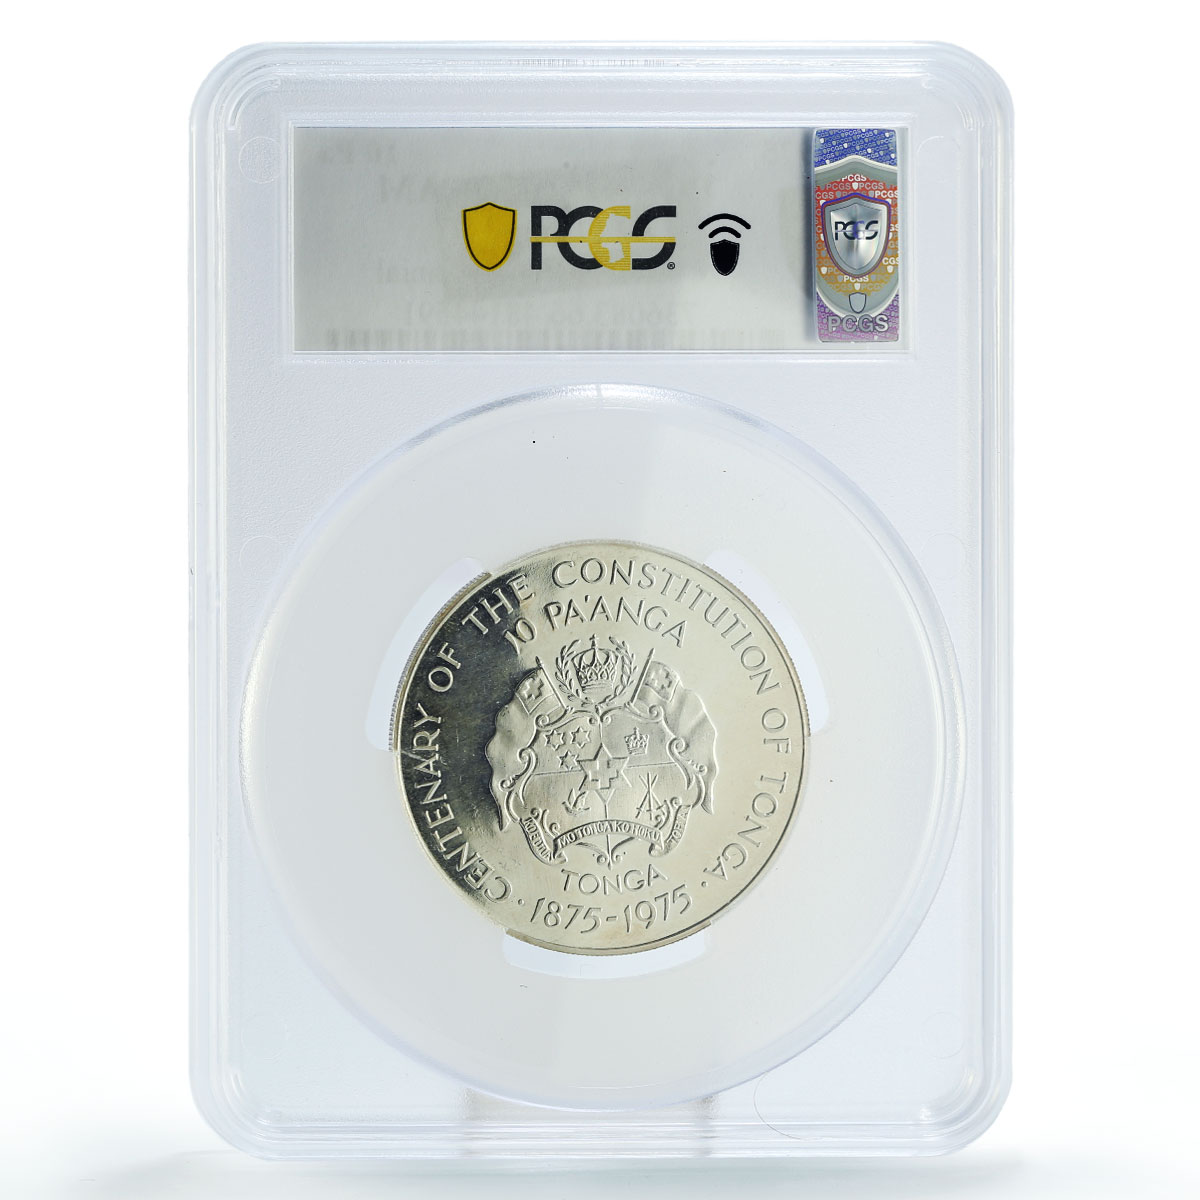 Tonga 10 paanga Constitution Centennial King Tupou IV PR66 PCGS silver coin 1975